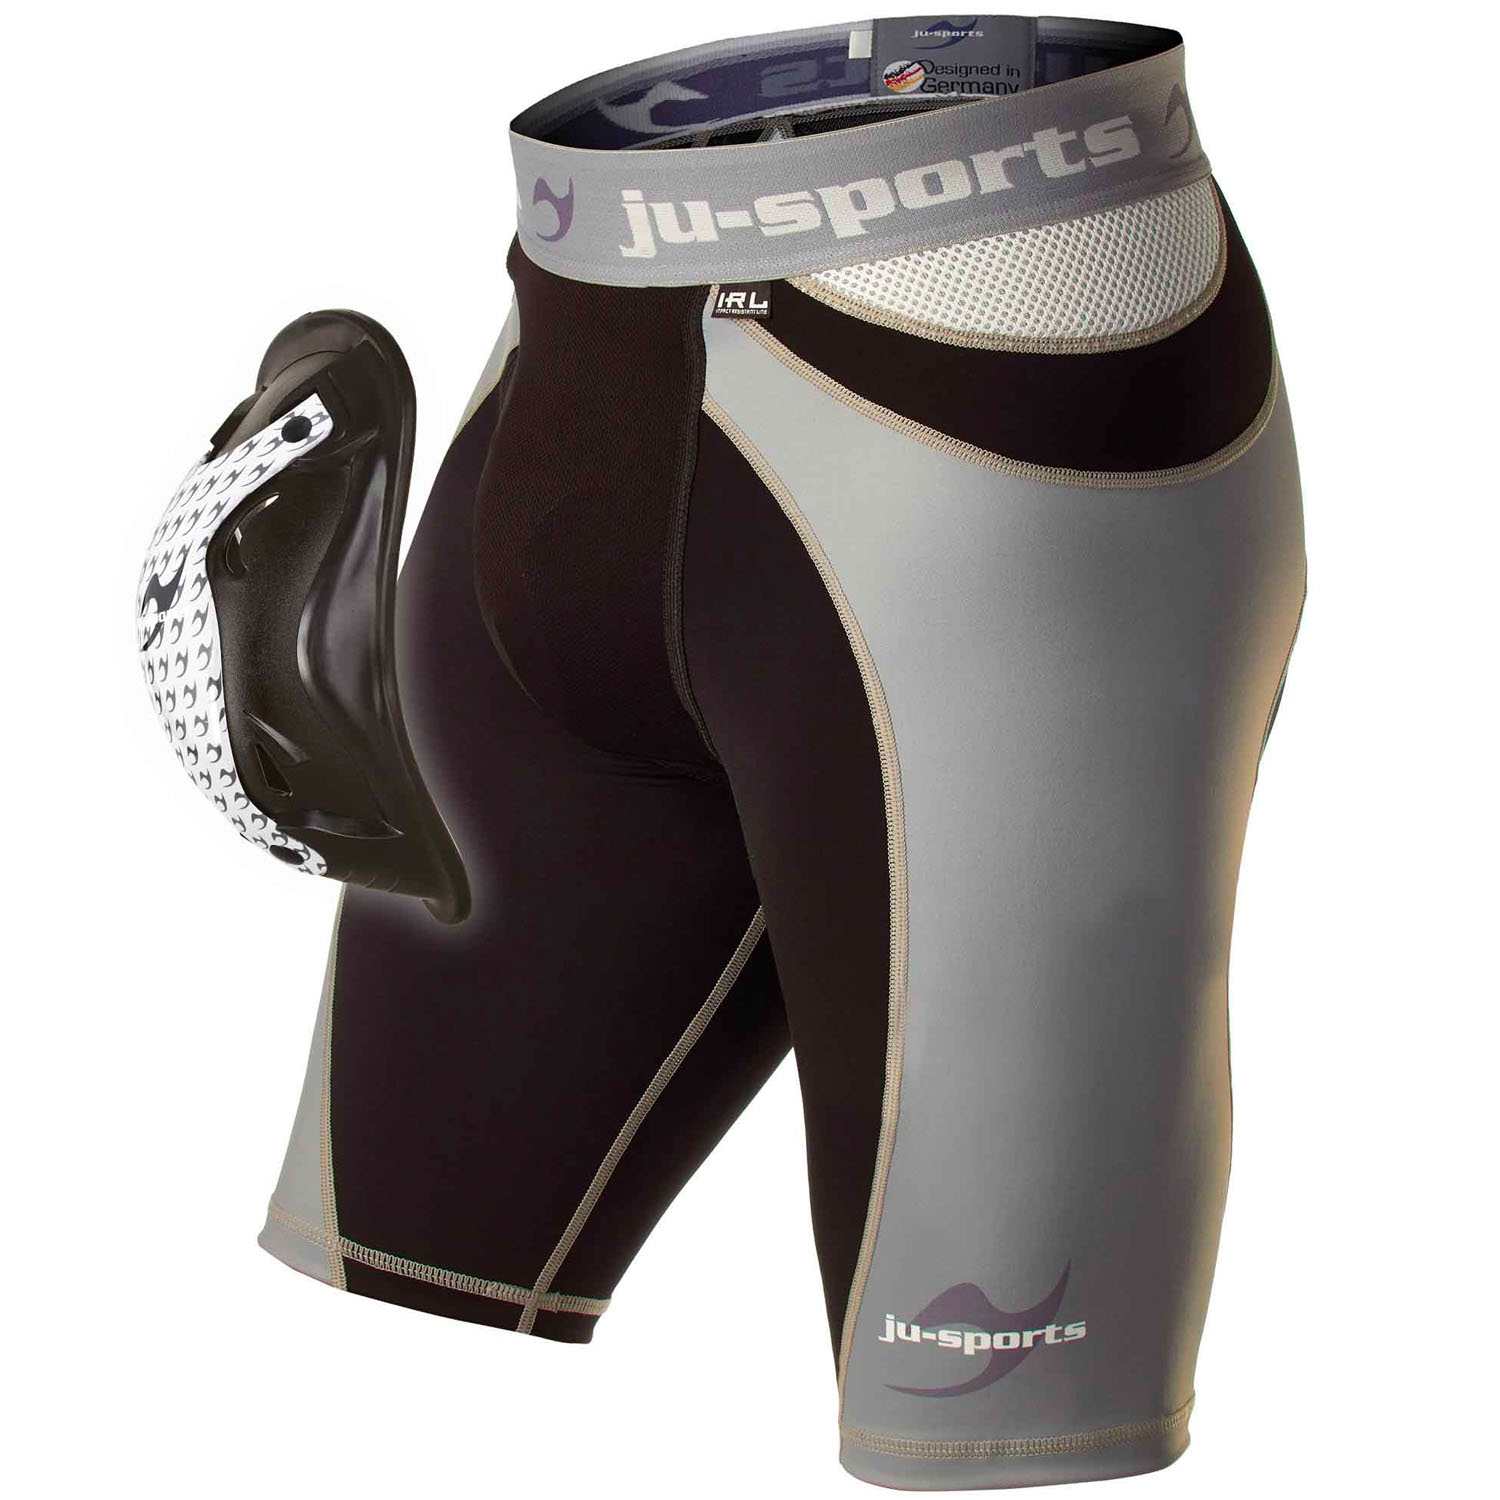 Ju-Sports Compression Shorts, Pro Line Motion Pro Flexcup XXL